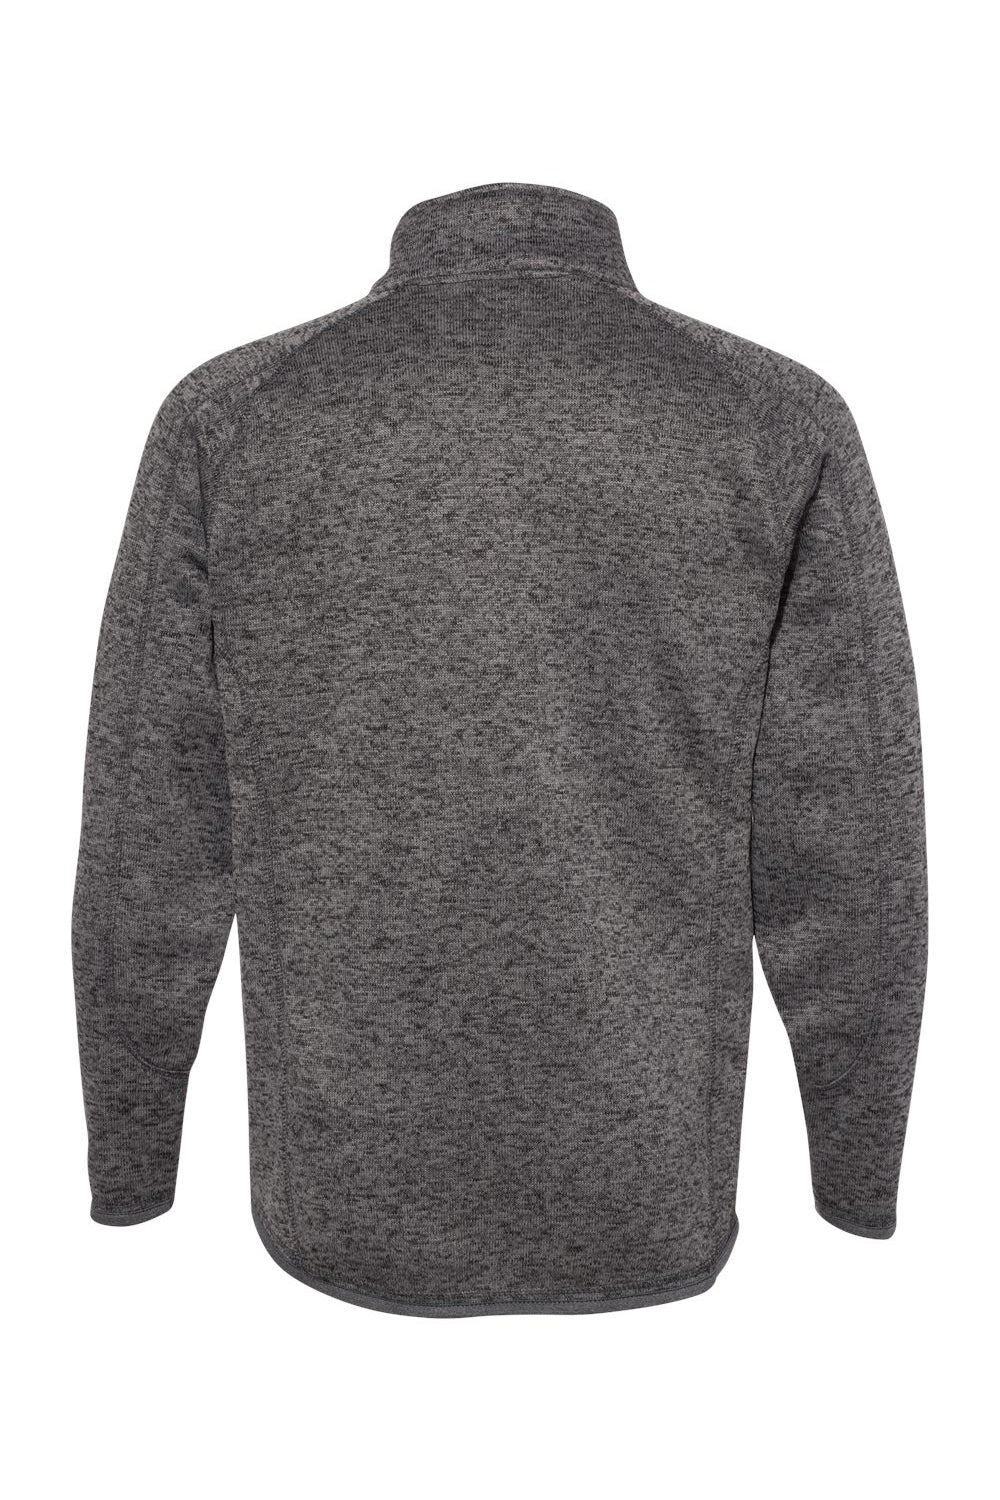 Burnside 3901 Mens Sweater Knit Full Zip Jacket Heather Charcoal Grey Flat Back